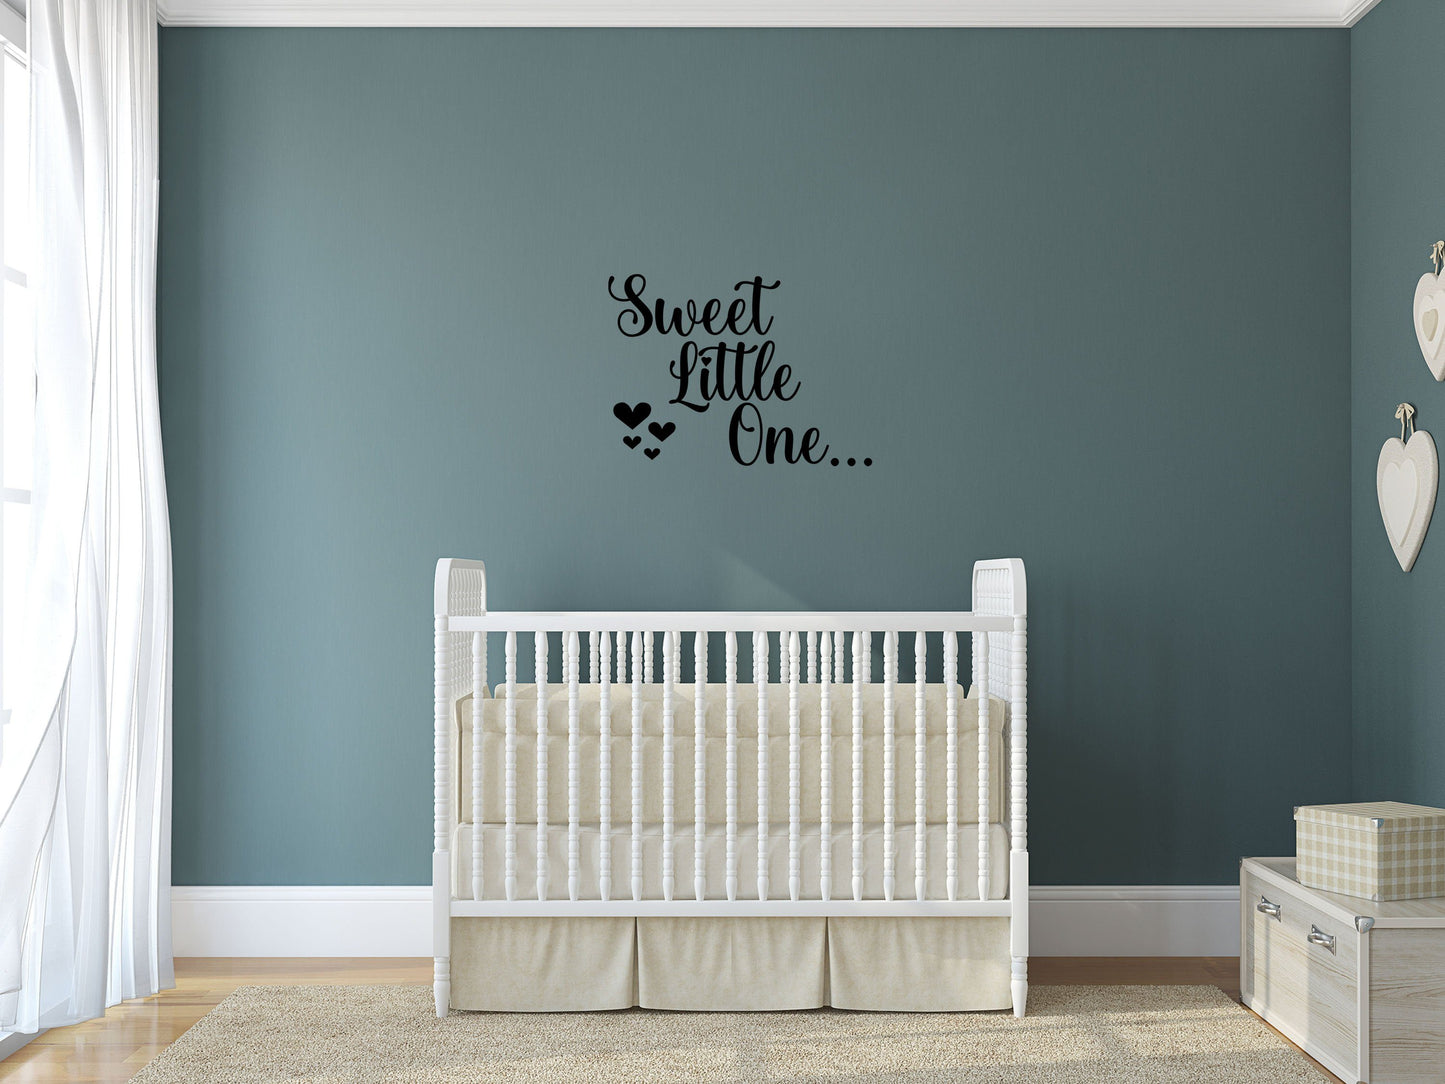 Sweet Little One Decal - Nursery Wall Art - Sweet Little One Wall Sign - Baby Wall Decal - Cute Nursery Decal Vinyl Wall Decal Done 